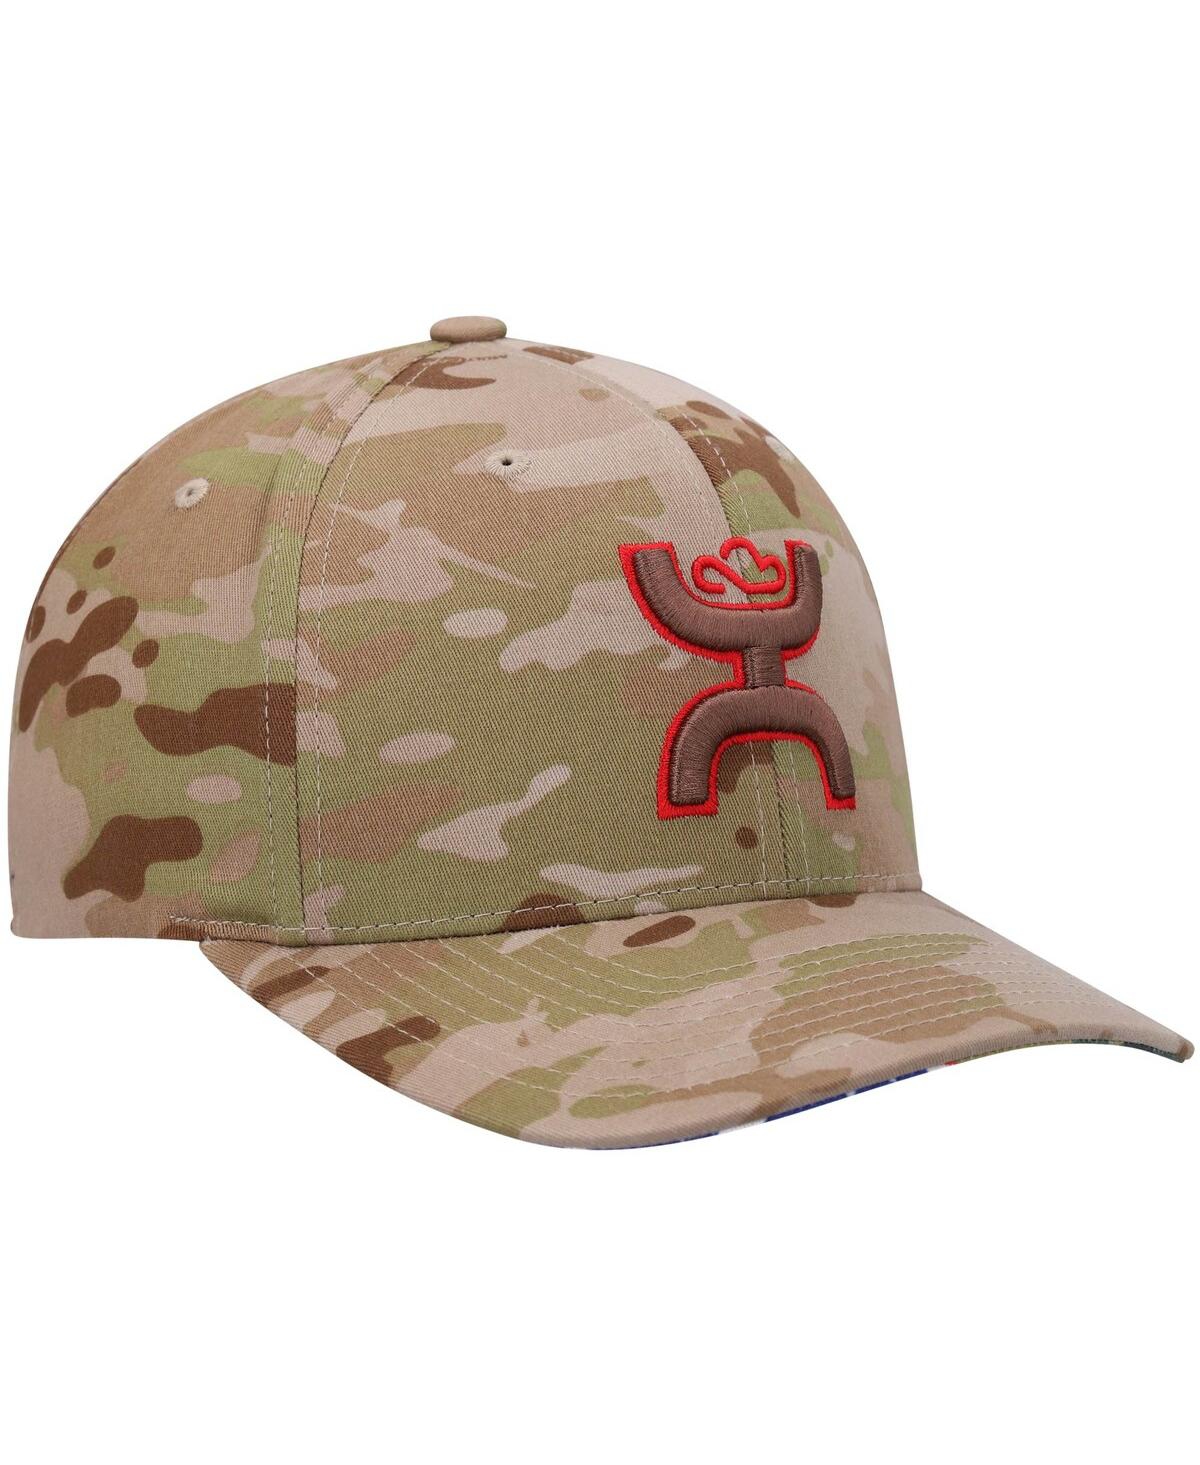 Shop Hooey Men's  Camo Chris Kyle Wordmark Flex Fit Hat